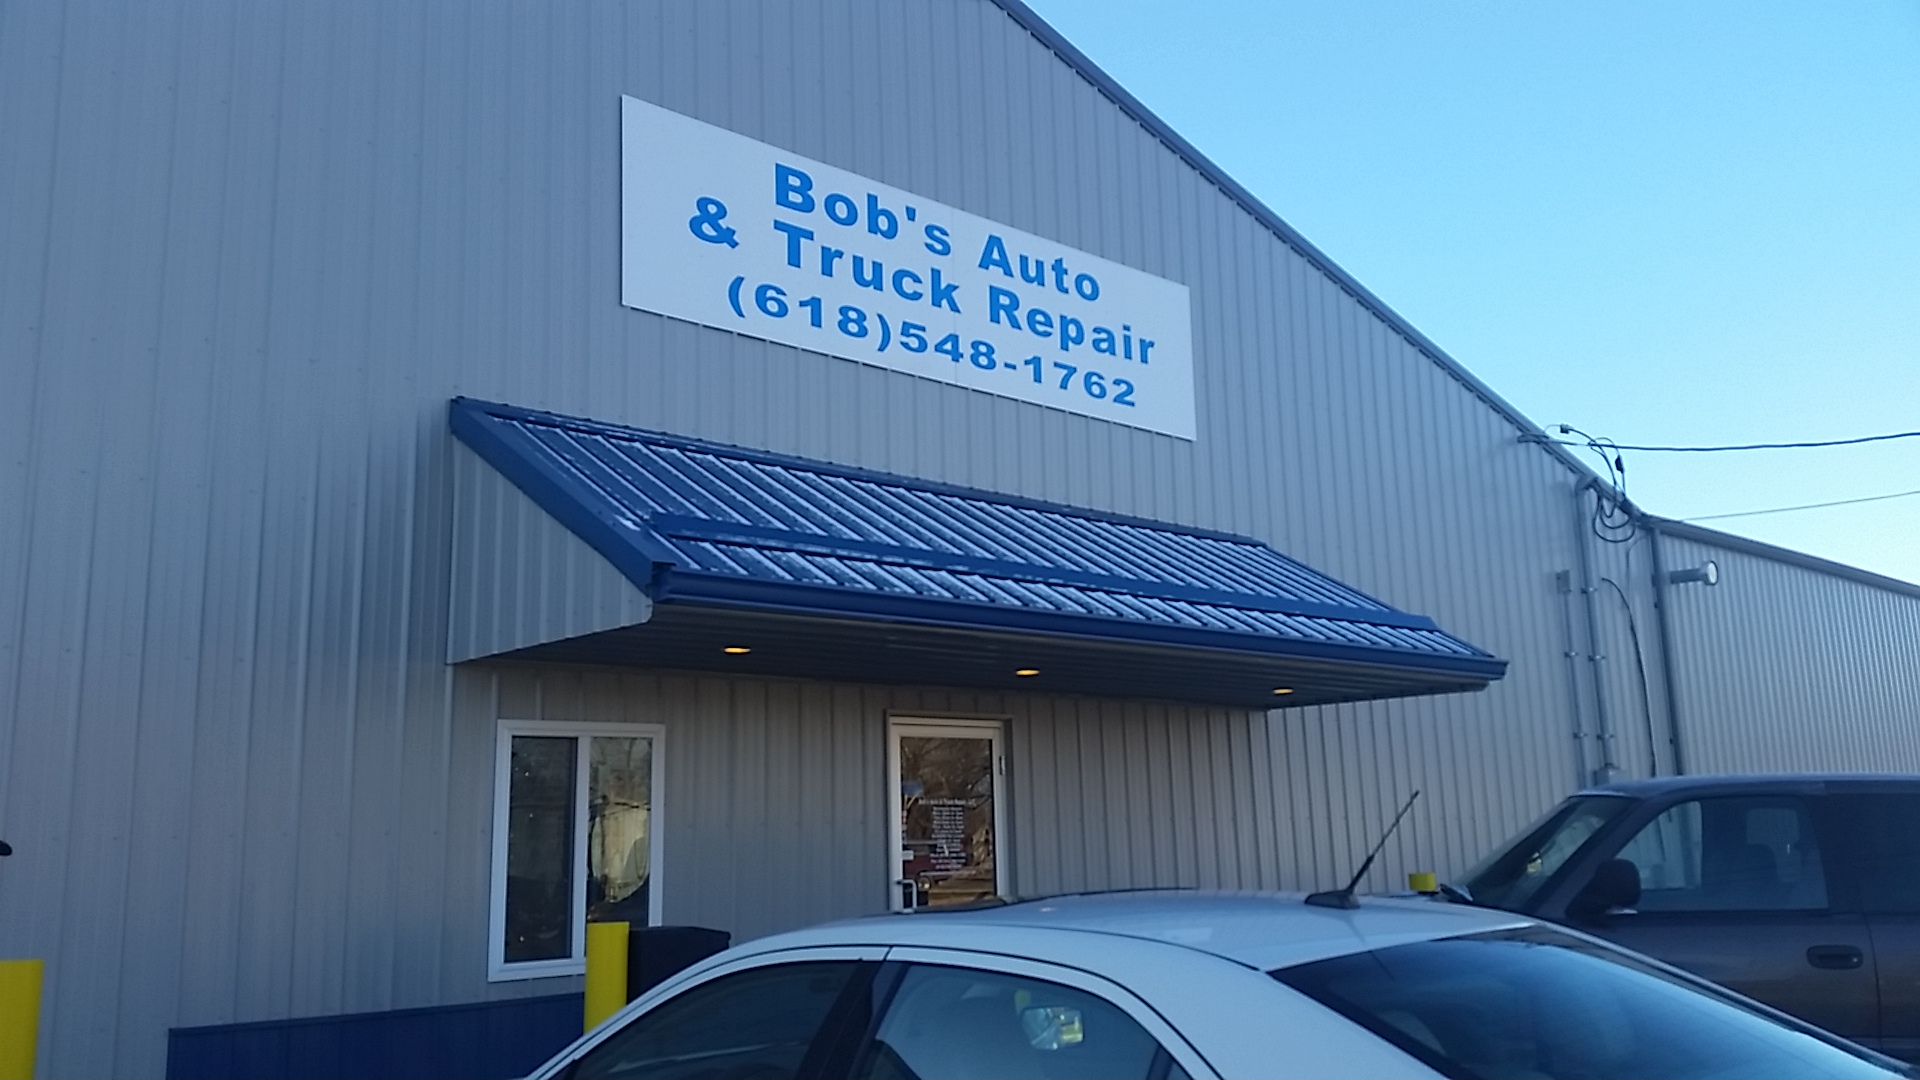 Bob's Auto & Truck Repair